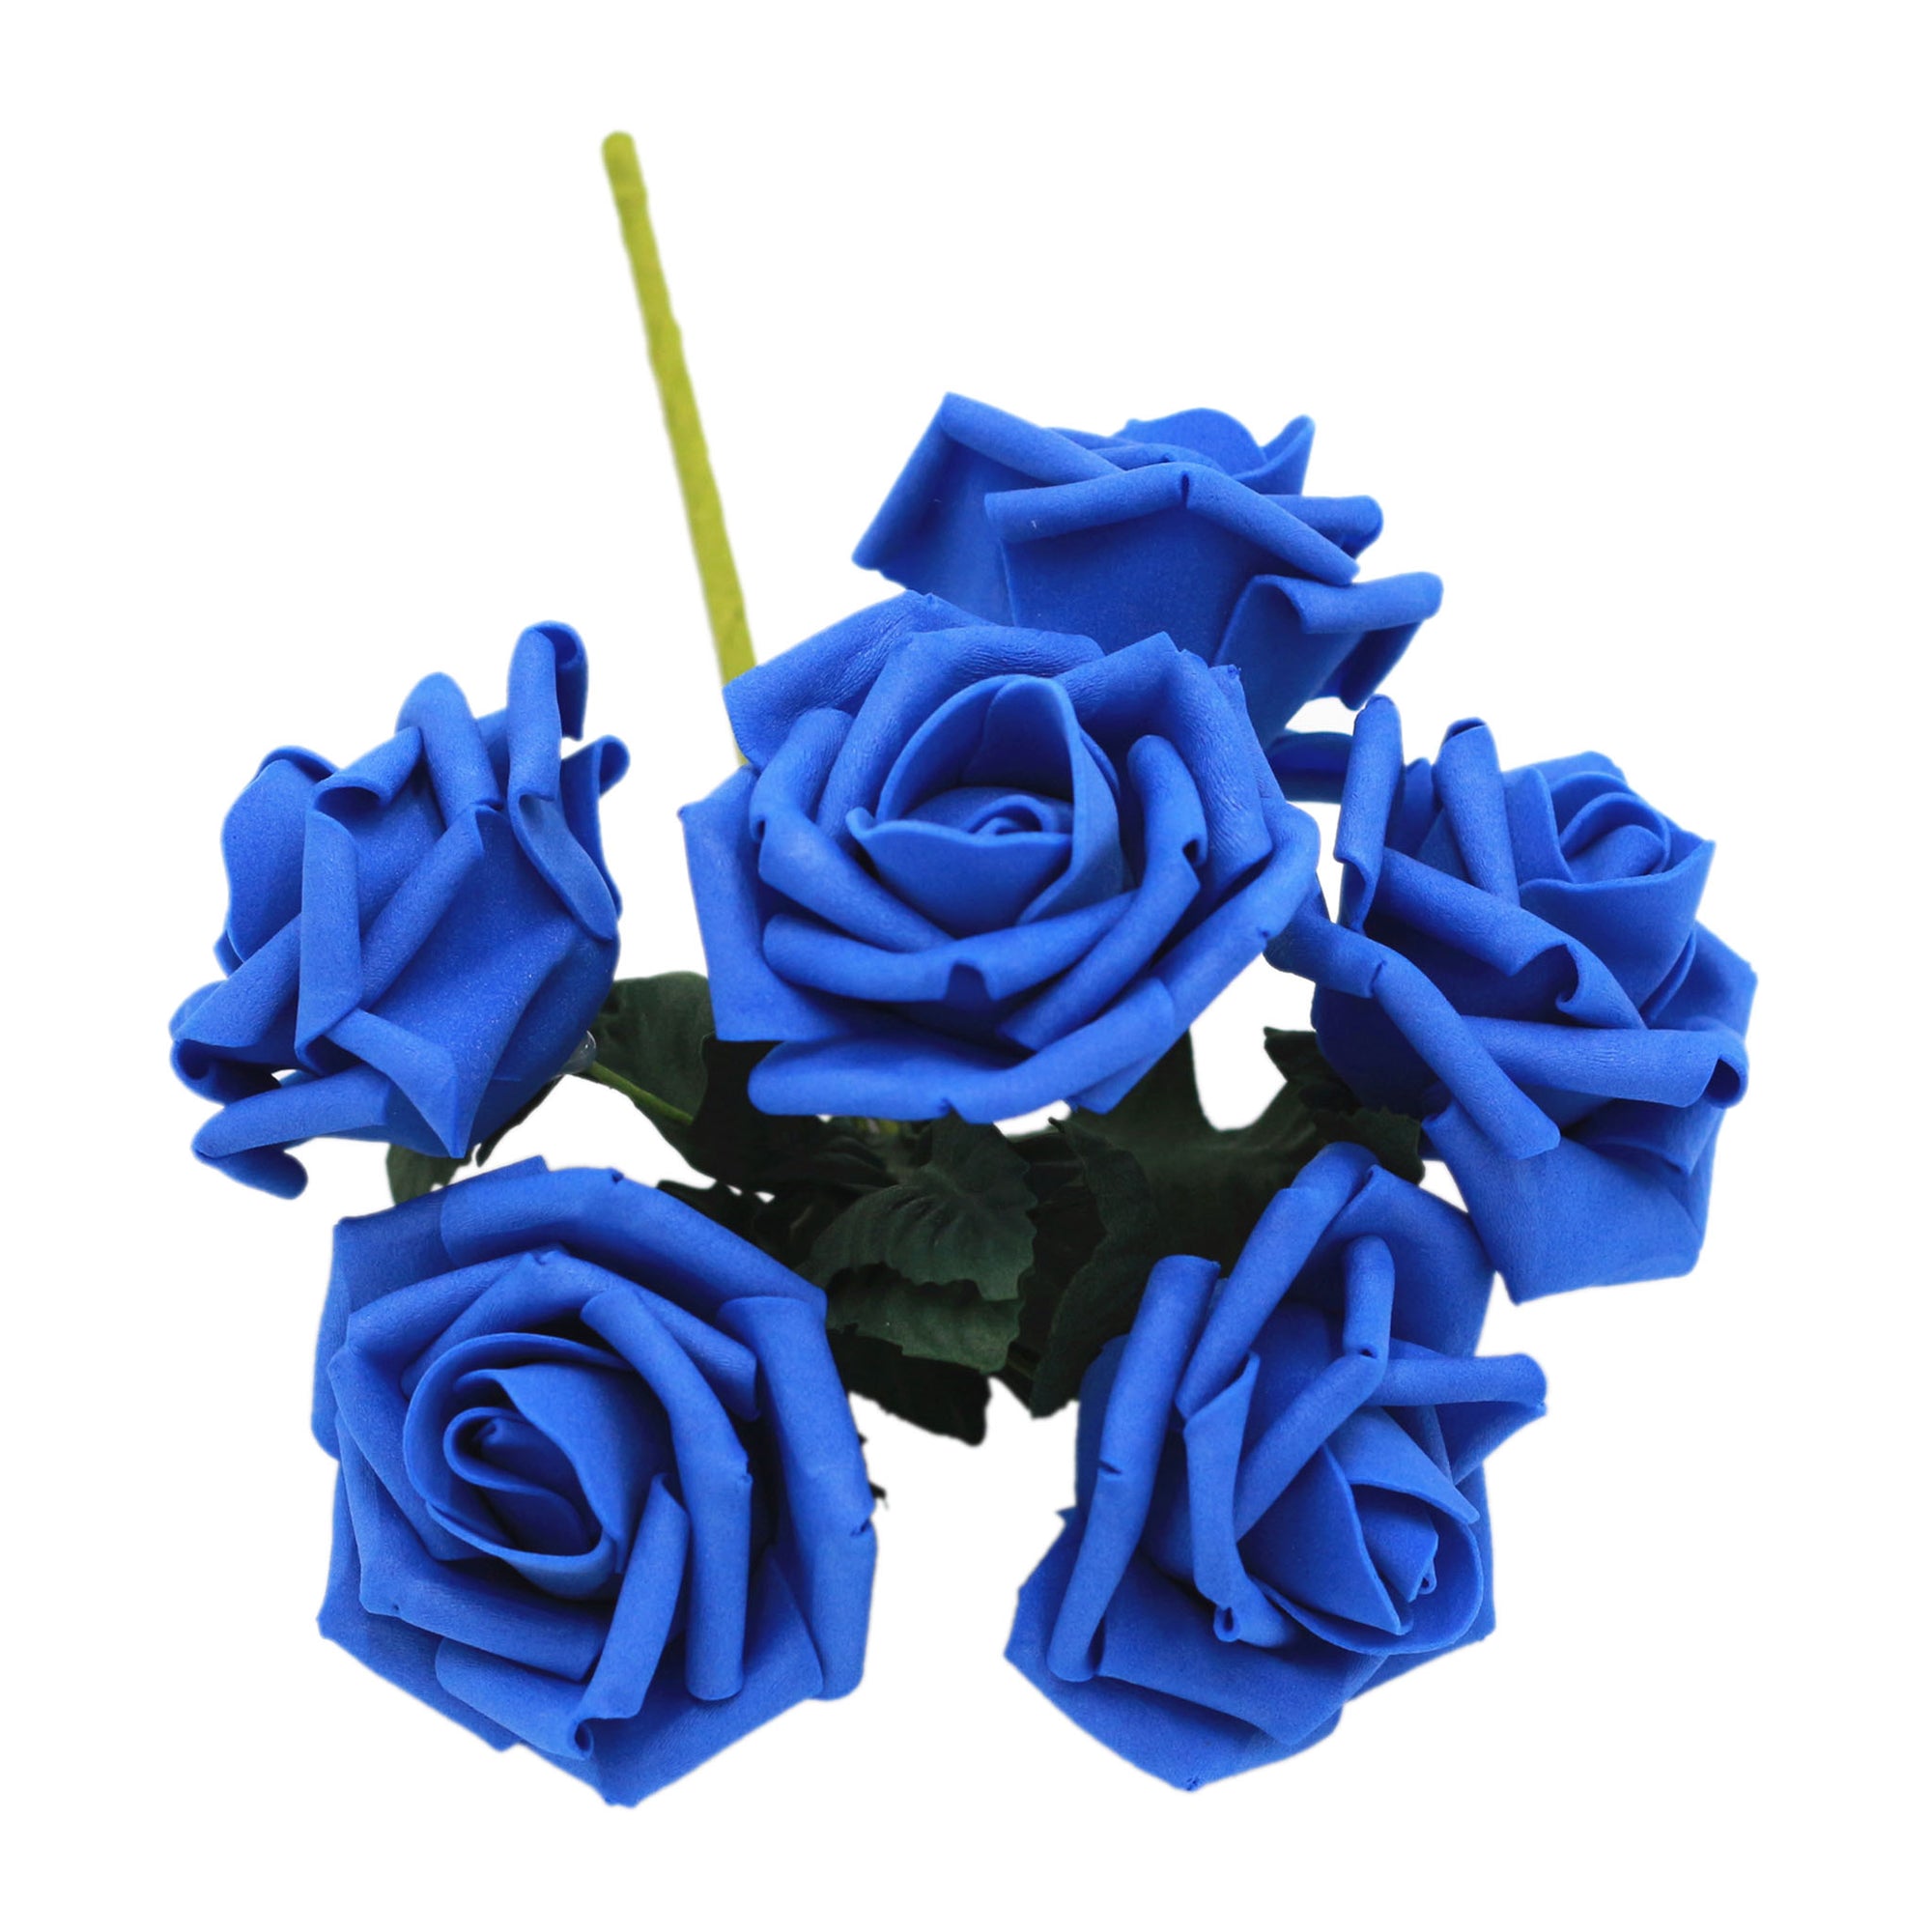 Blue Wedding Flowers Royal Blue Roses Artificial Flowers